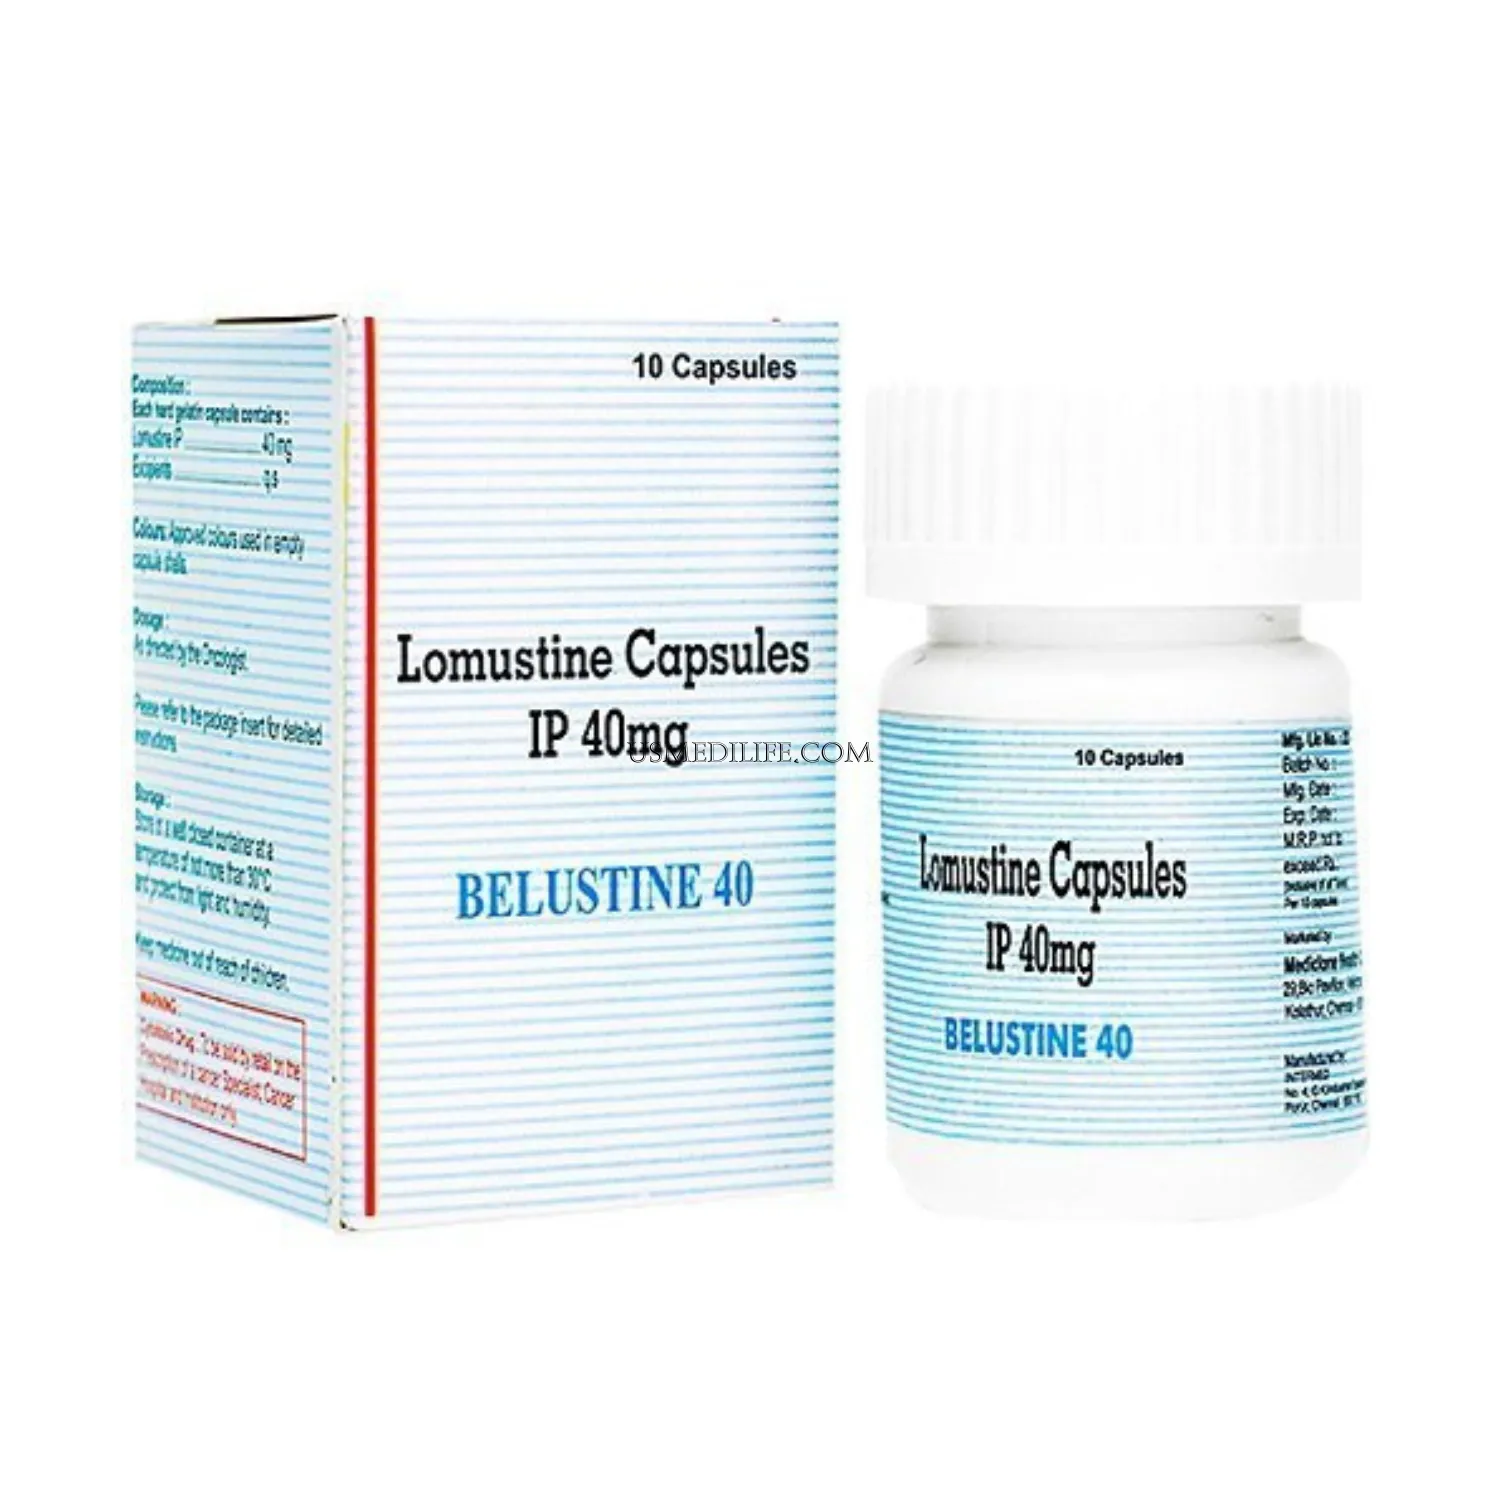 Belustine 40 Mg Image